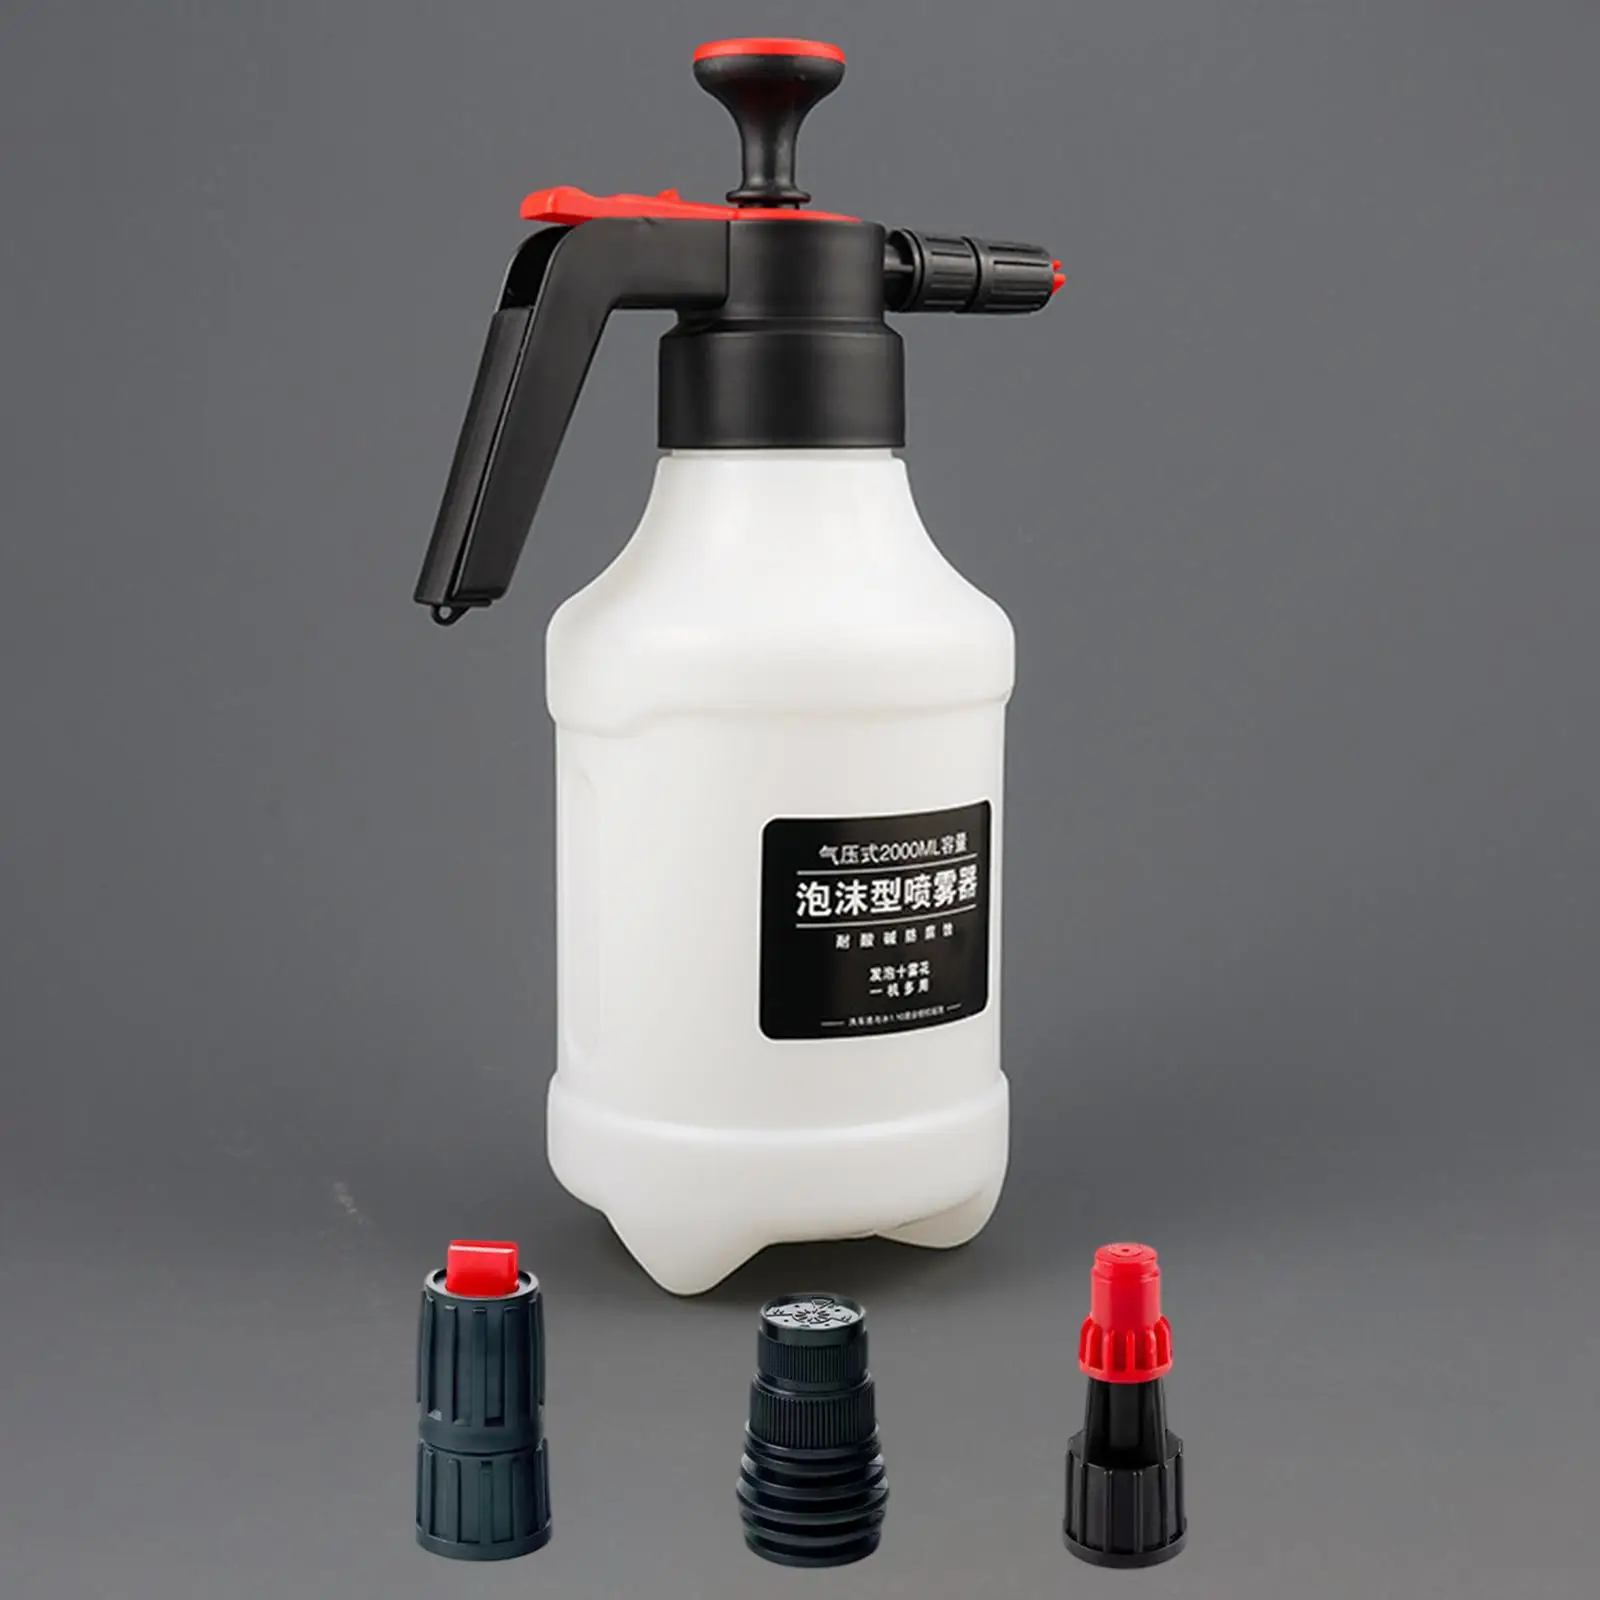 Car Water Sprayer Single Hand Pressure 2.0L for Car Window Washing